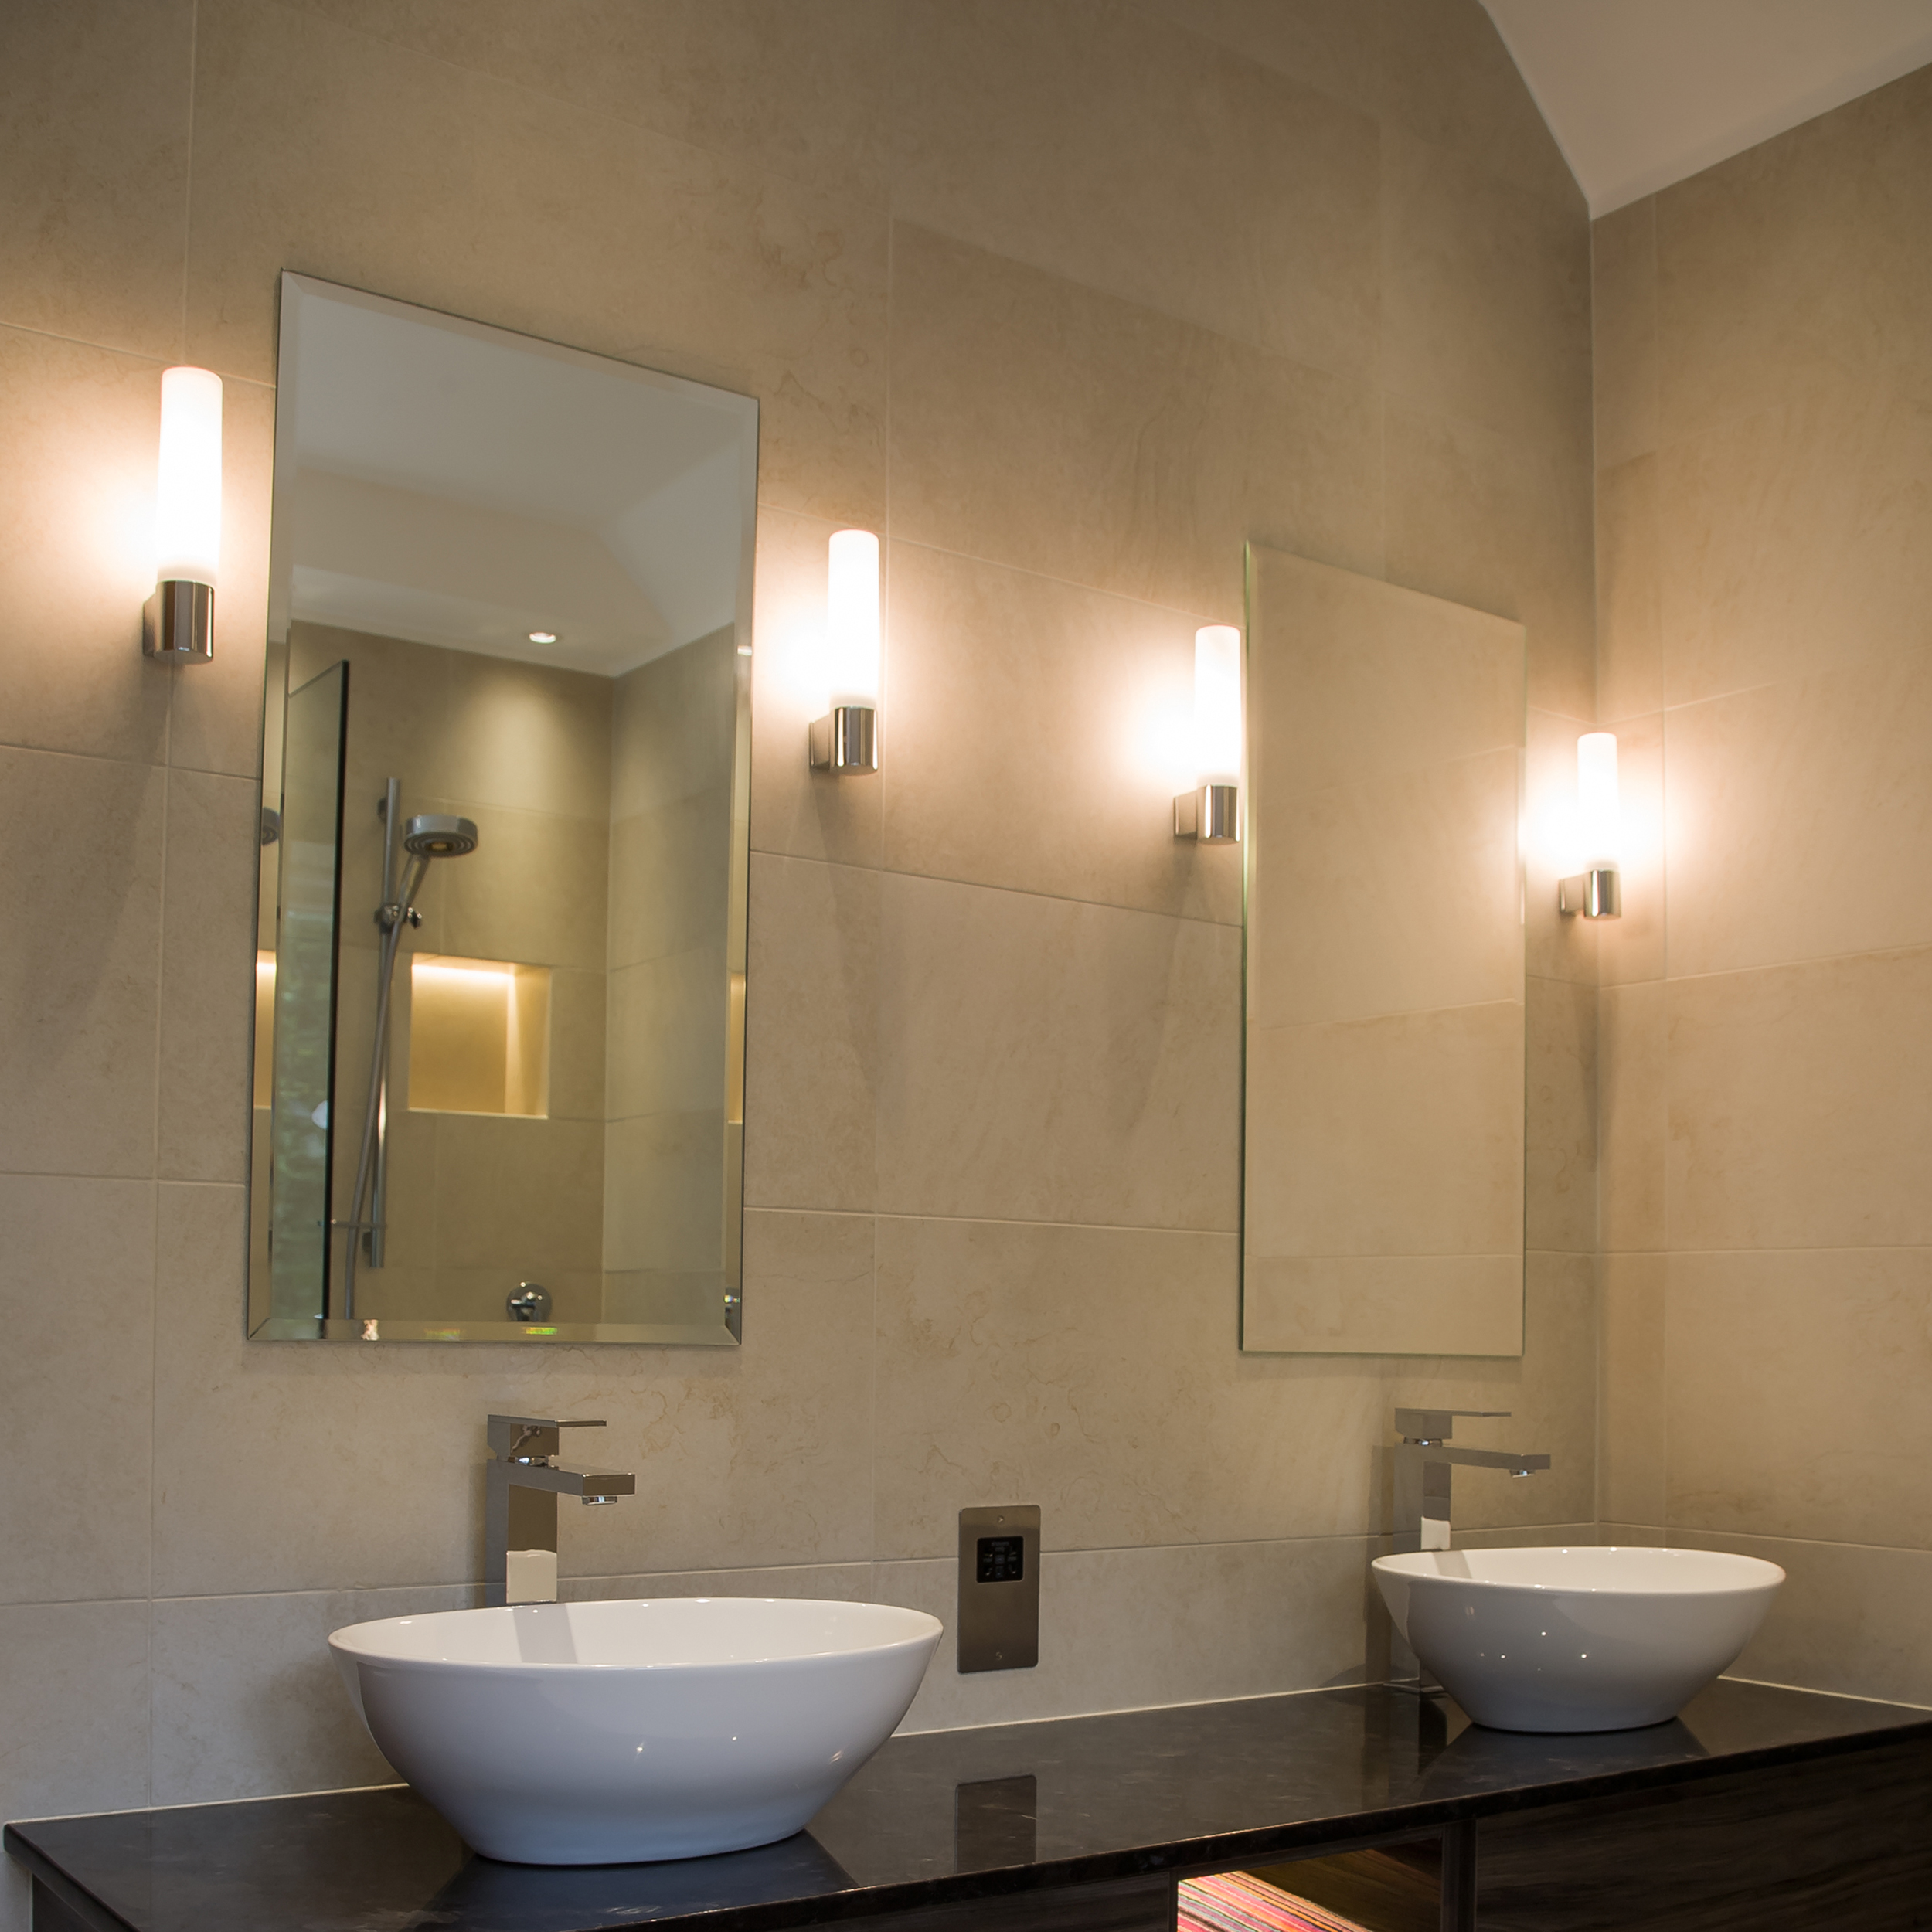 Bathroom lights Bathroom light from contemporary lights to home design ideas MRKOZXP